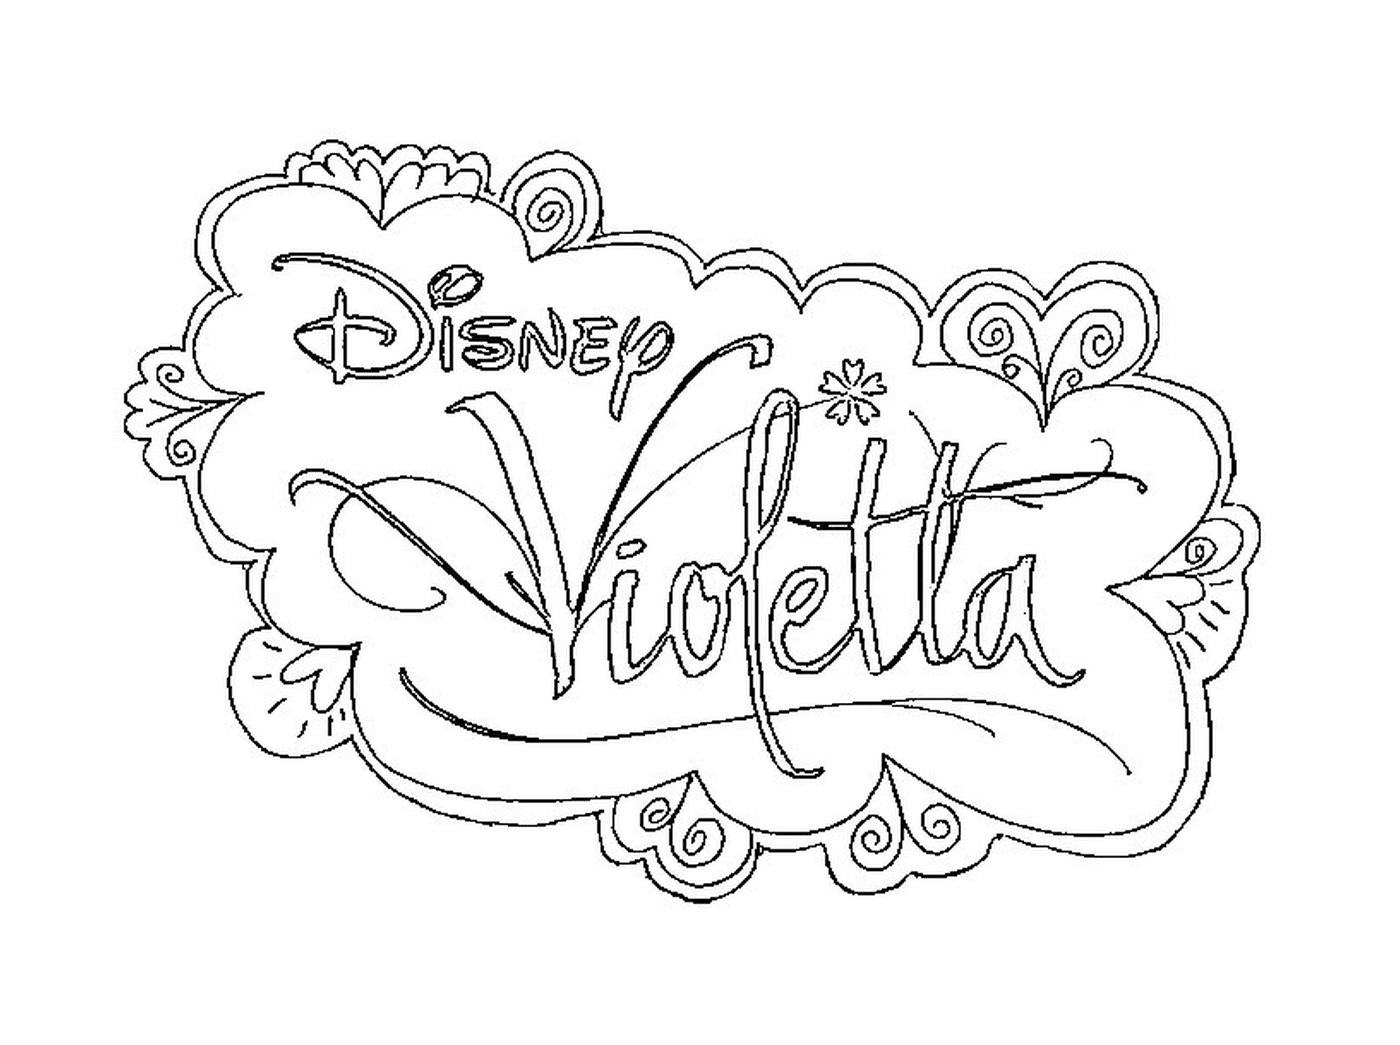  Logo de Disney Violetta 